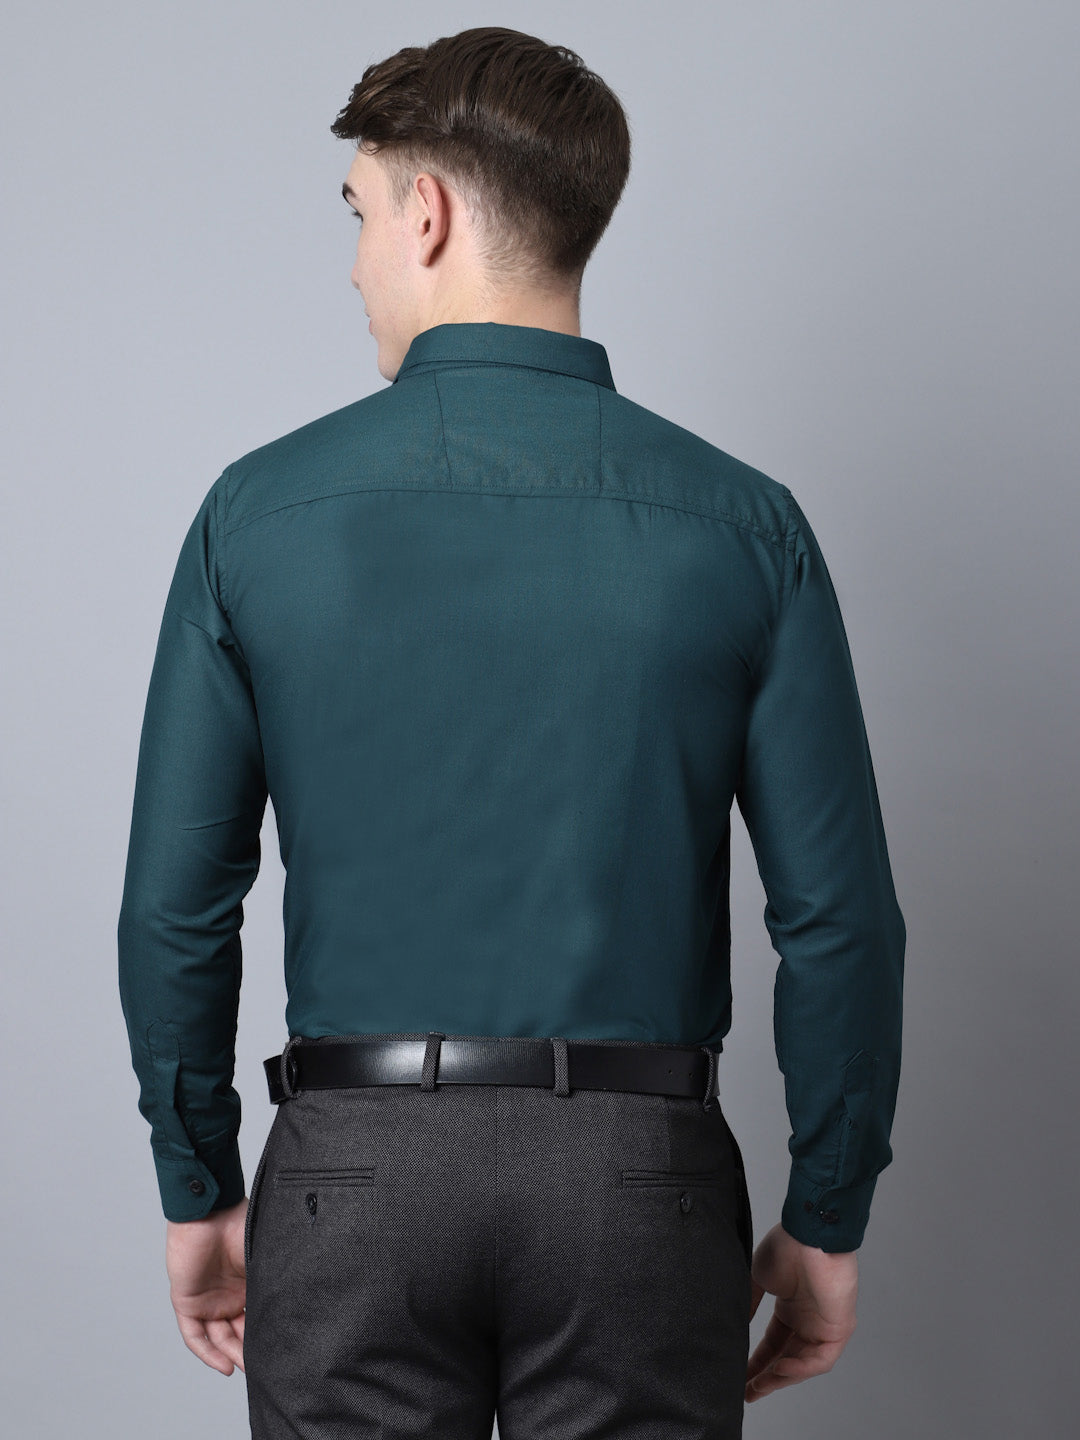 Majestic Man Versatile Solid Formal Shirt - Dark Green